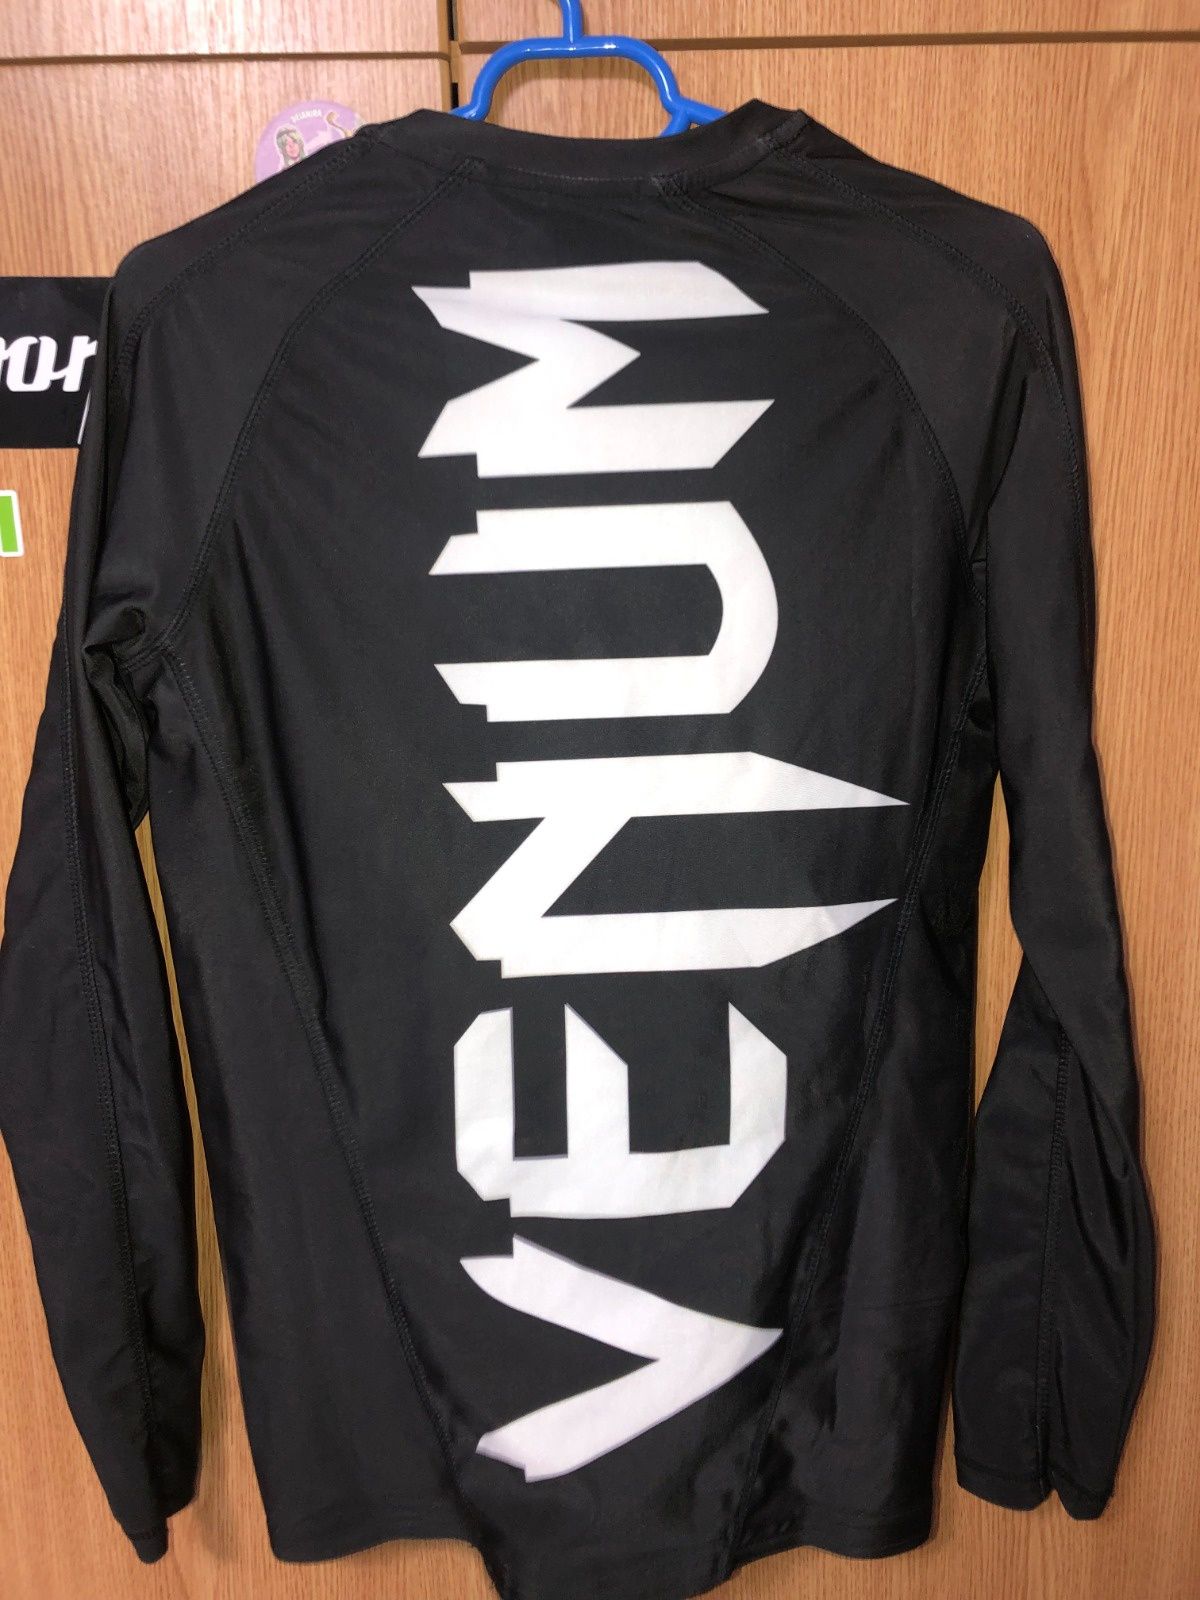 Rashguard ( Bluza de compresie ) Venum Giant logo